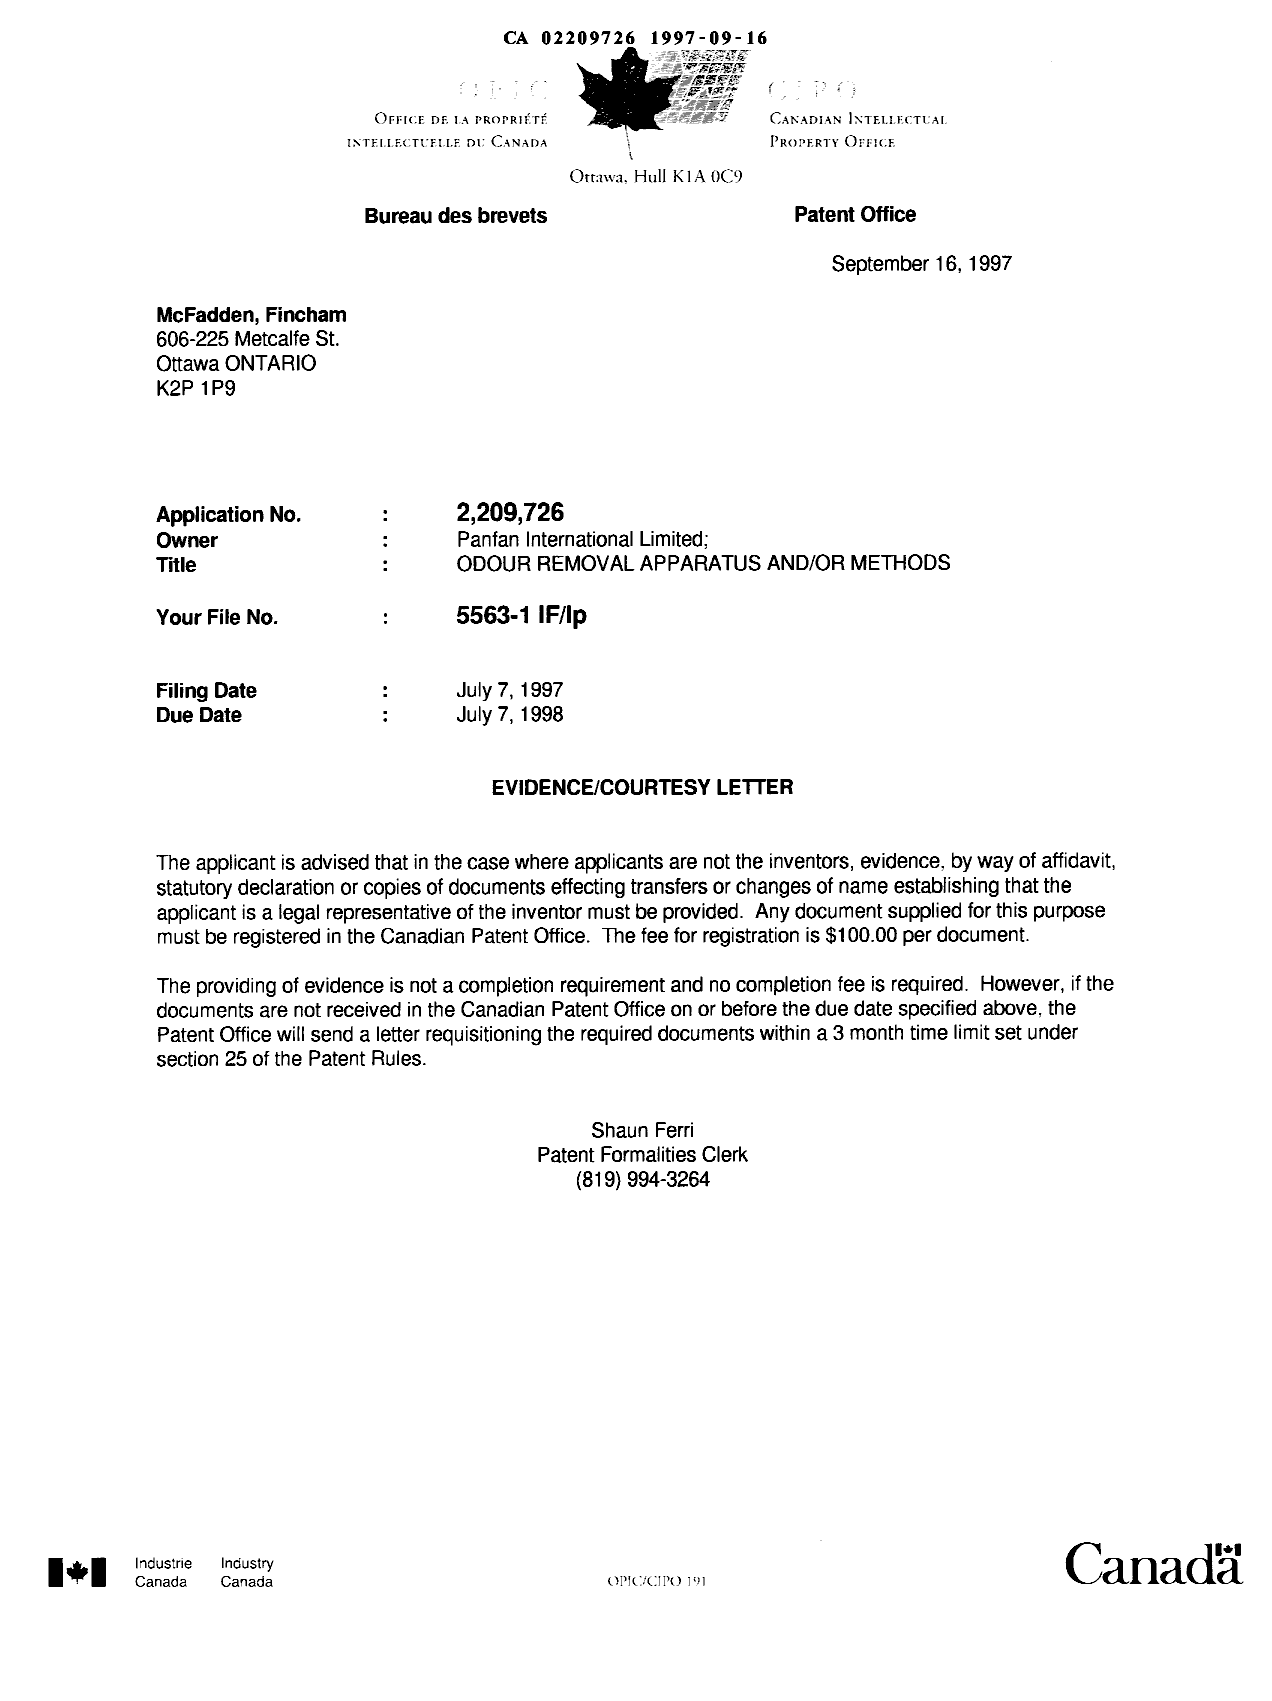 Canadian Patent Document 2209726. Correspondence 19970916. Image 1 of 1